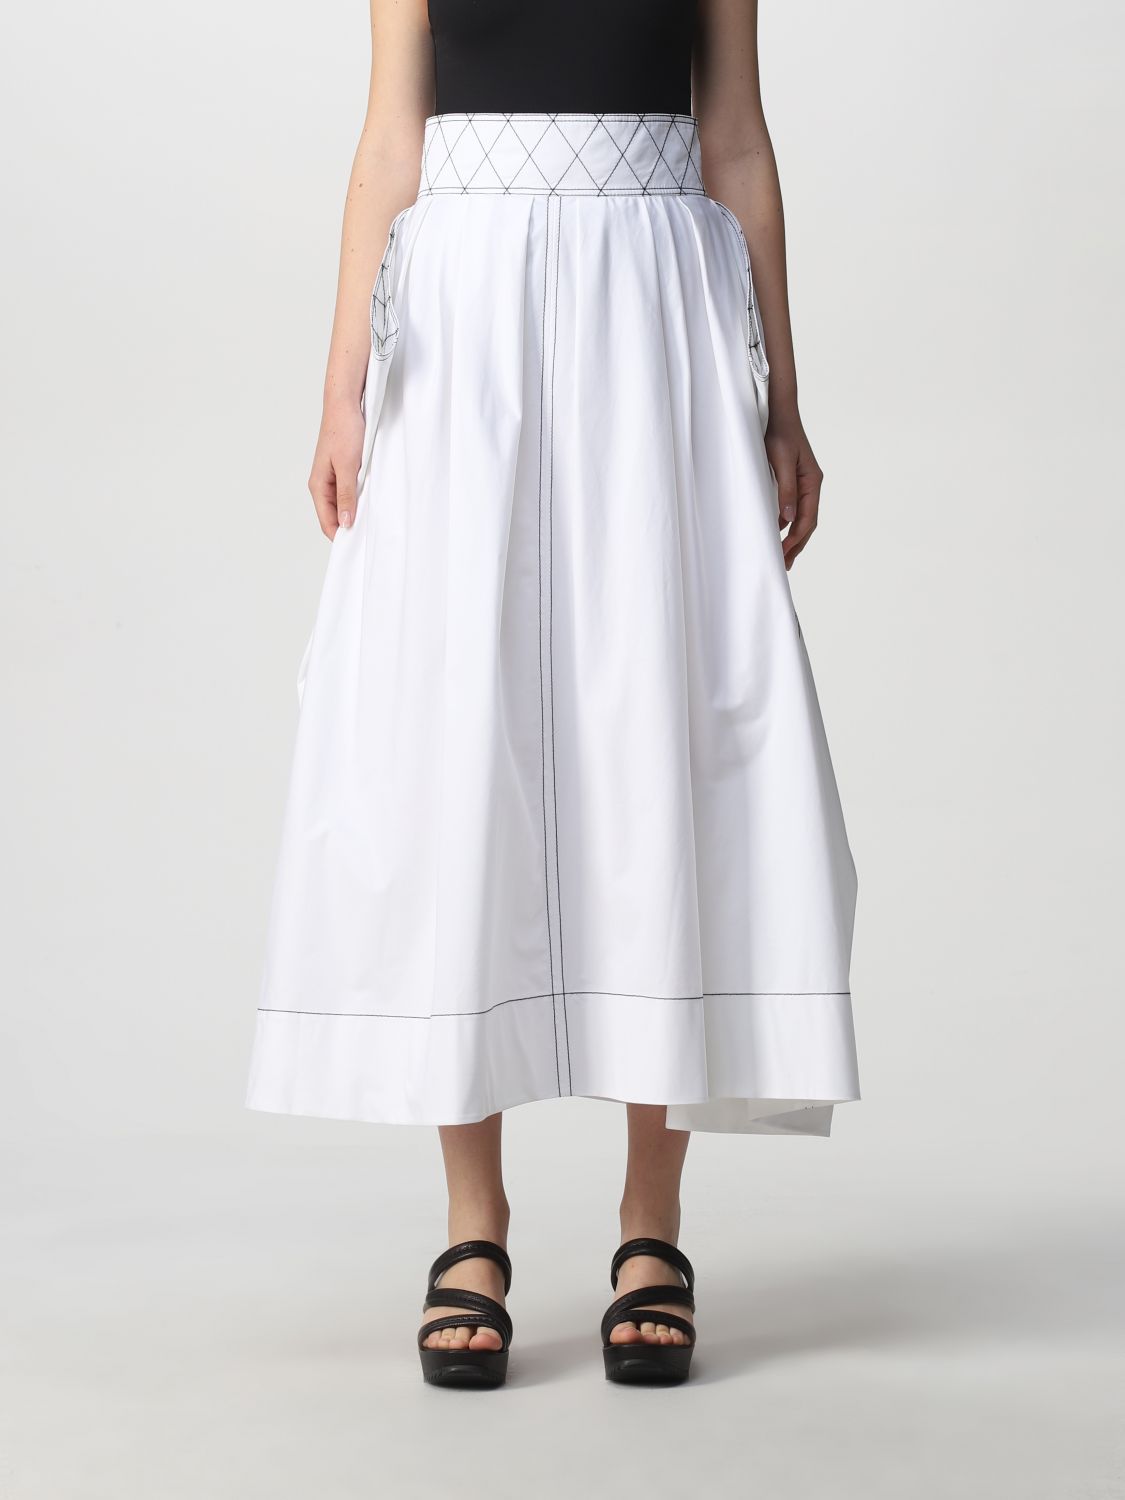 TORY BURCH: skirt for woman - White | Tory Burch skirt 136001 online on  